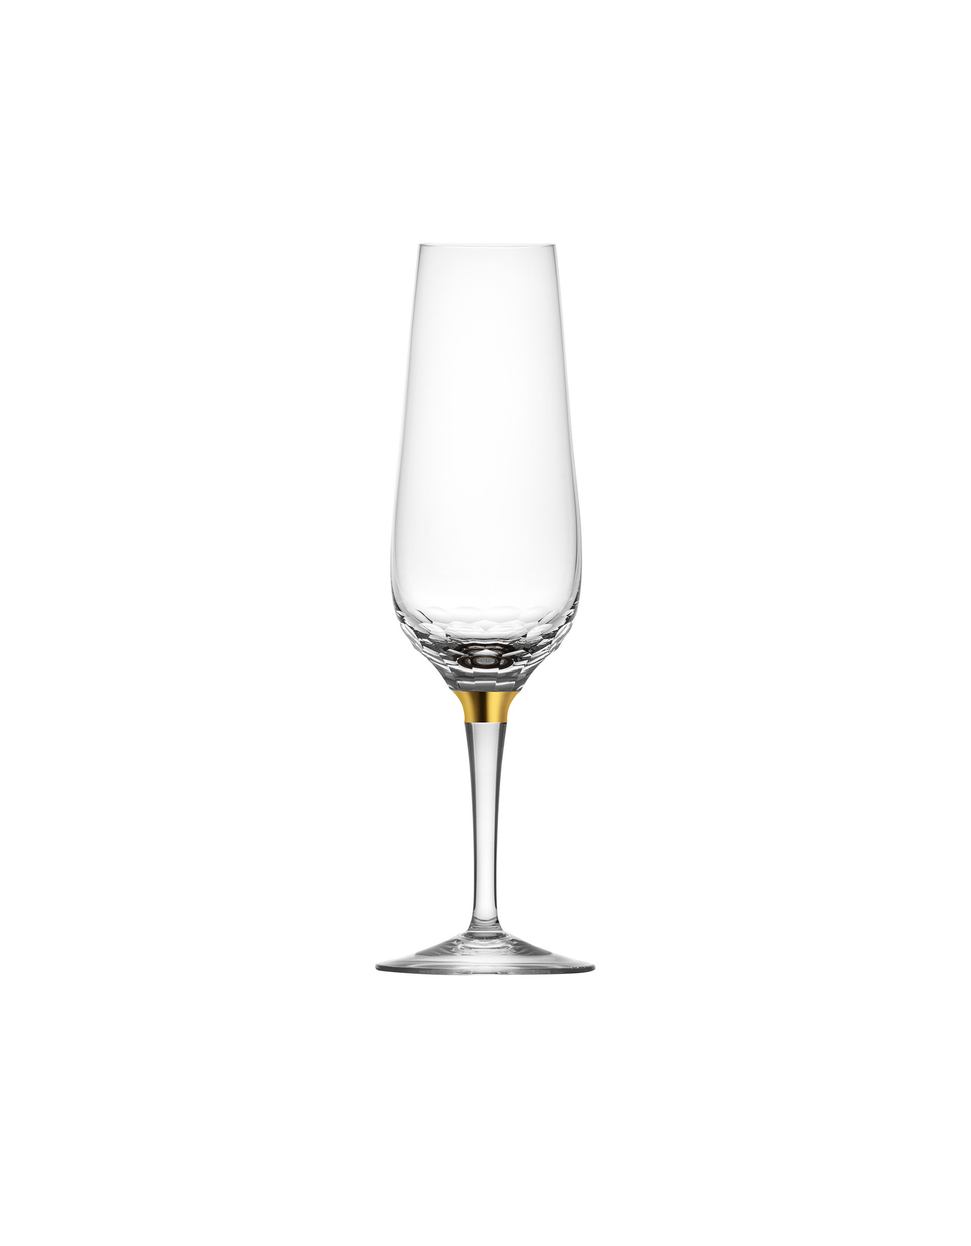 Jewel champagne glass, 330 ml